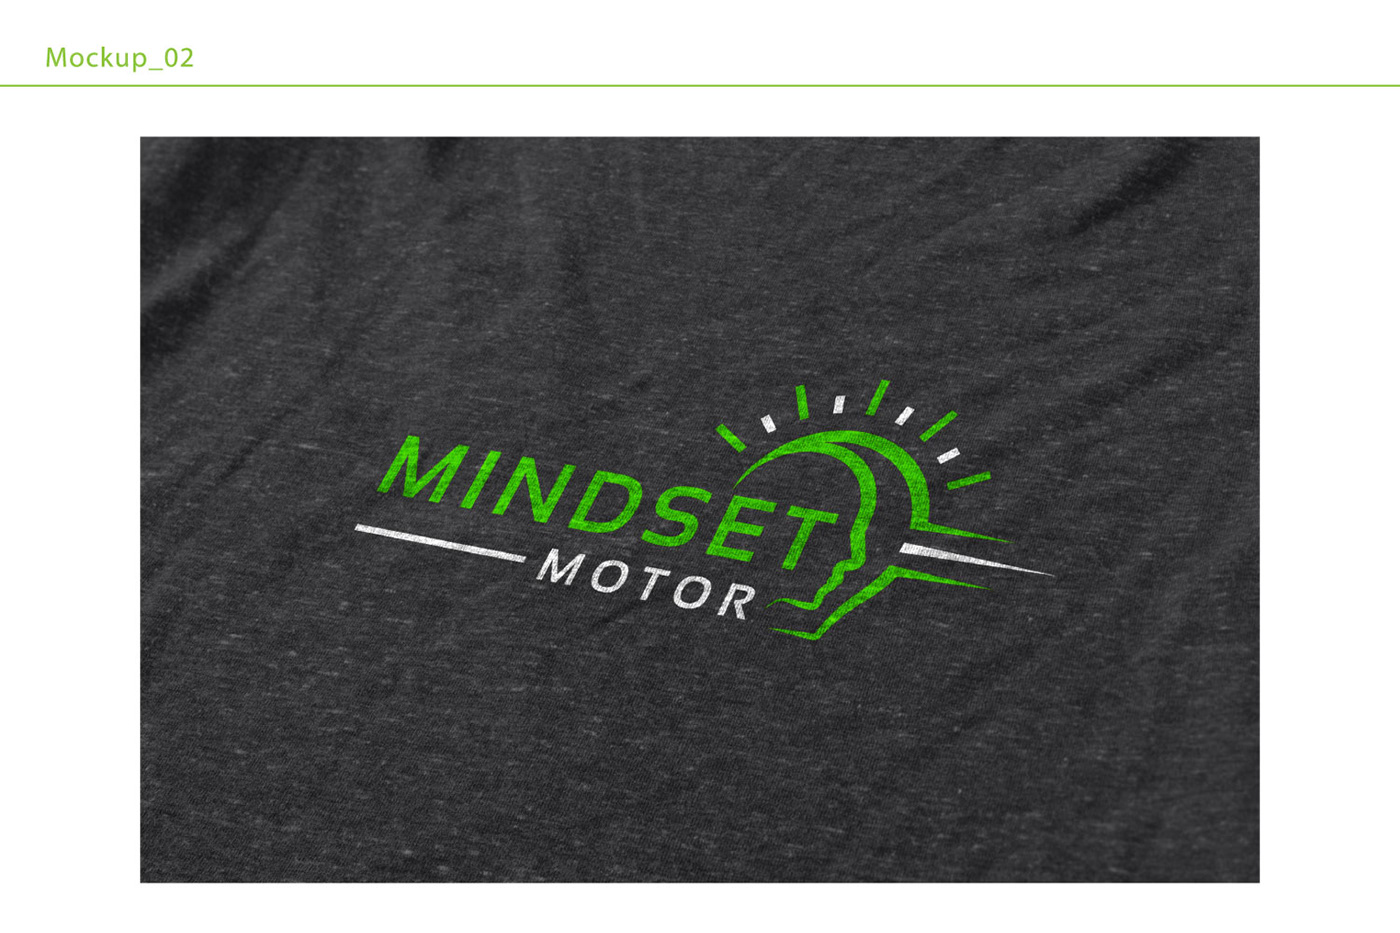 Innovation logo motivation logo inspire logo motivate logo